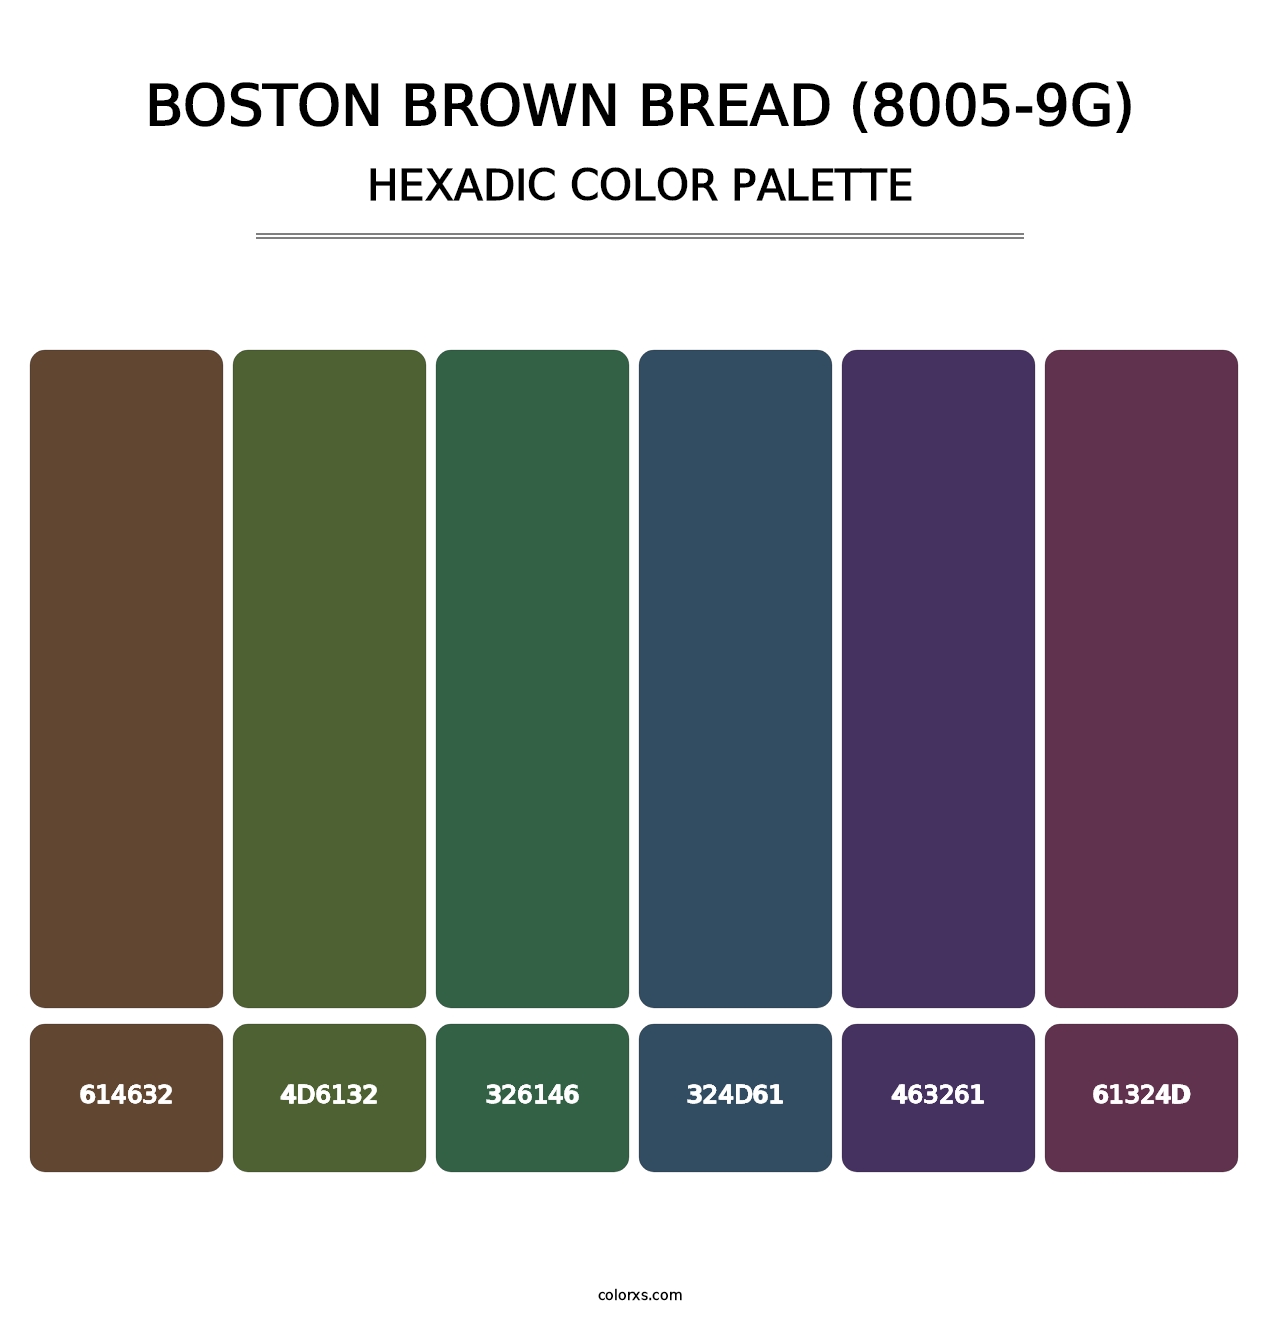 Boston Brown Bread (8005-9G) - Hexadic Color Palette